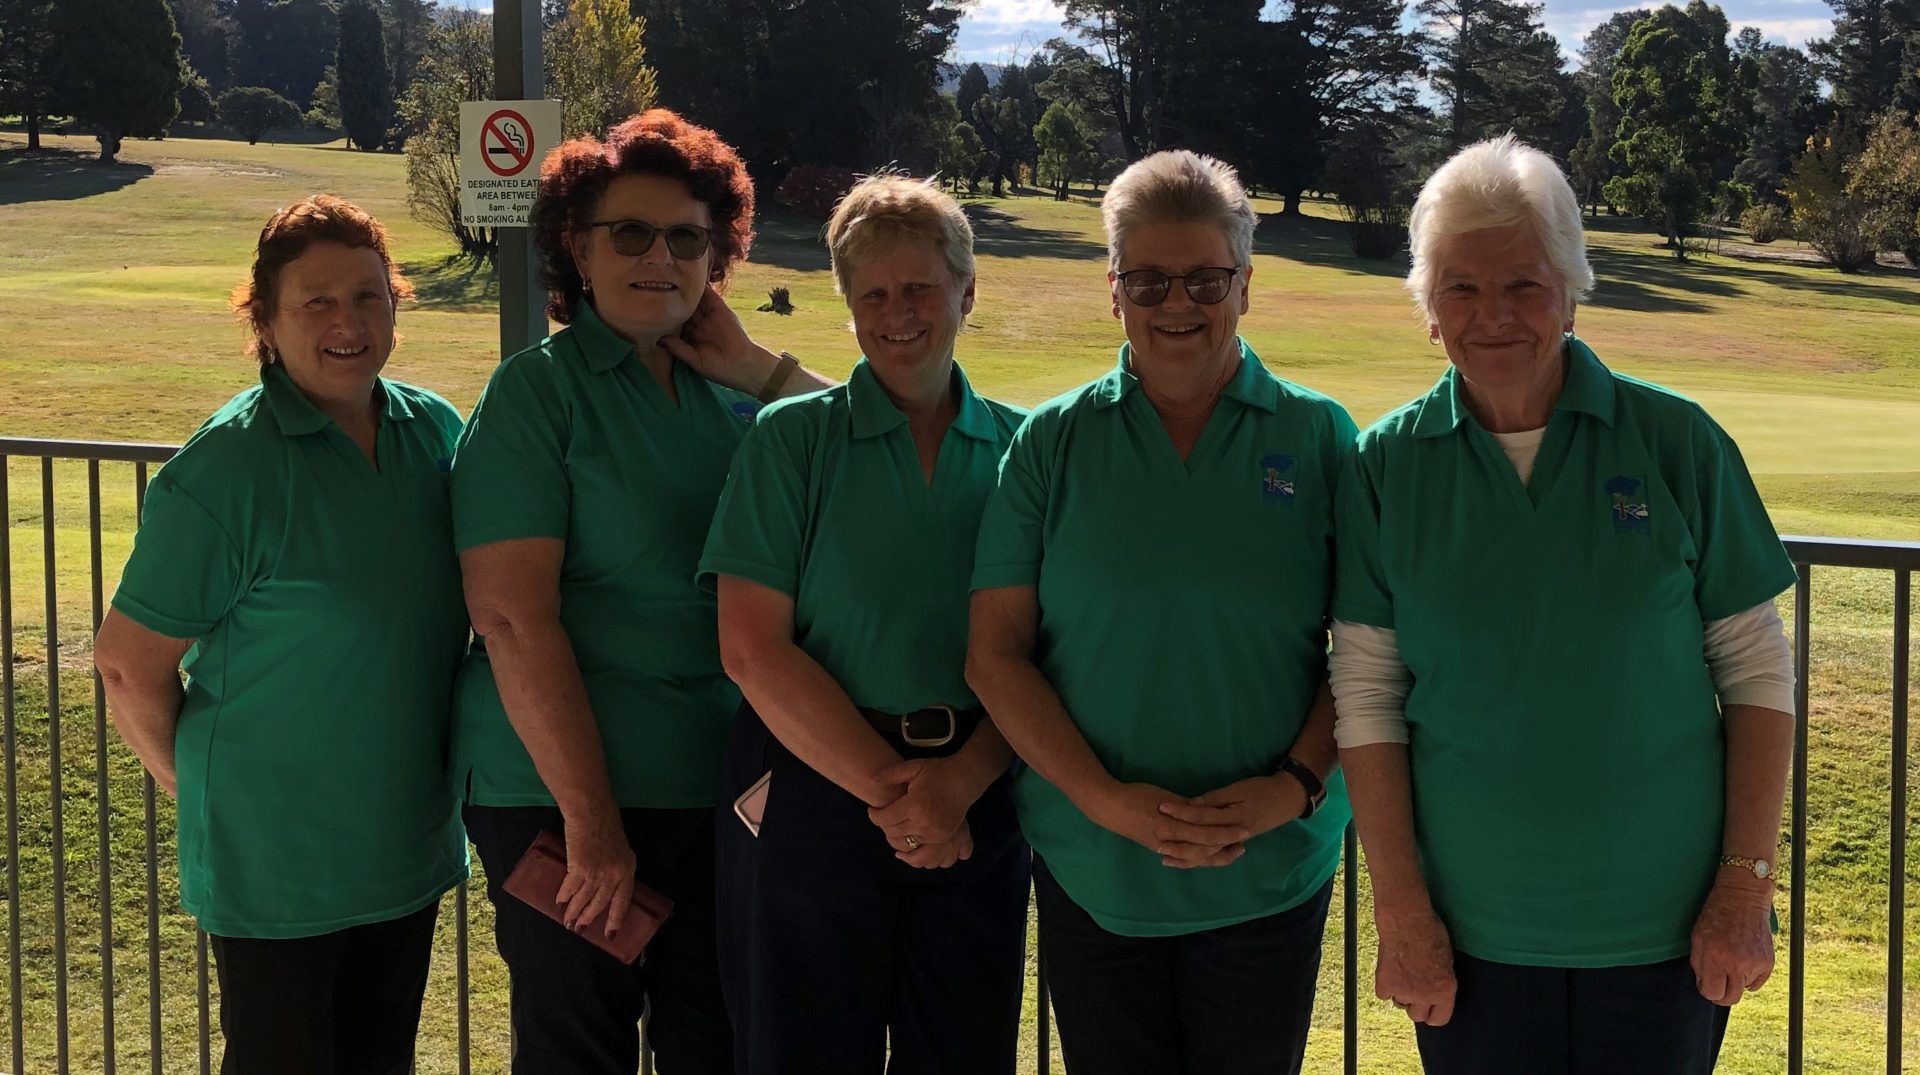 Oberon Women's Golf Pennants team wins again